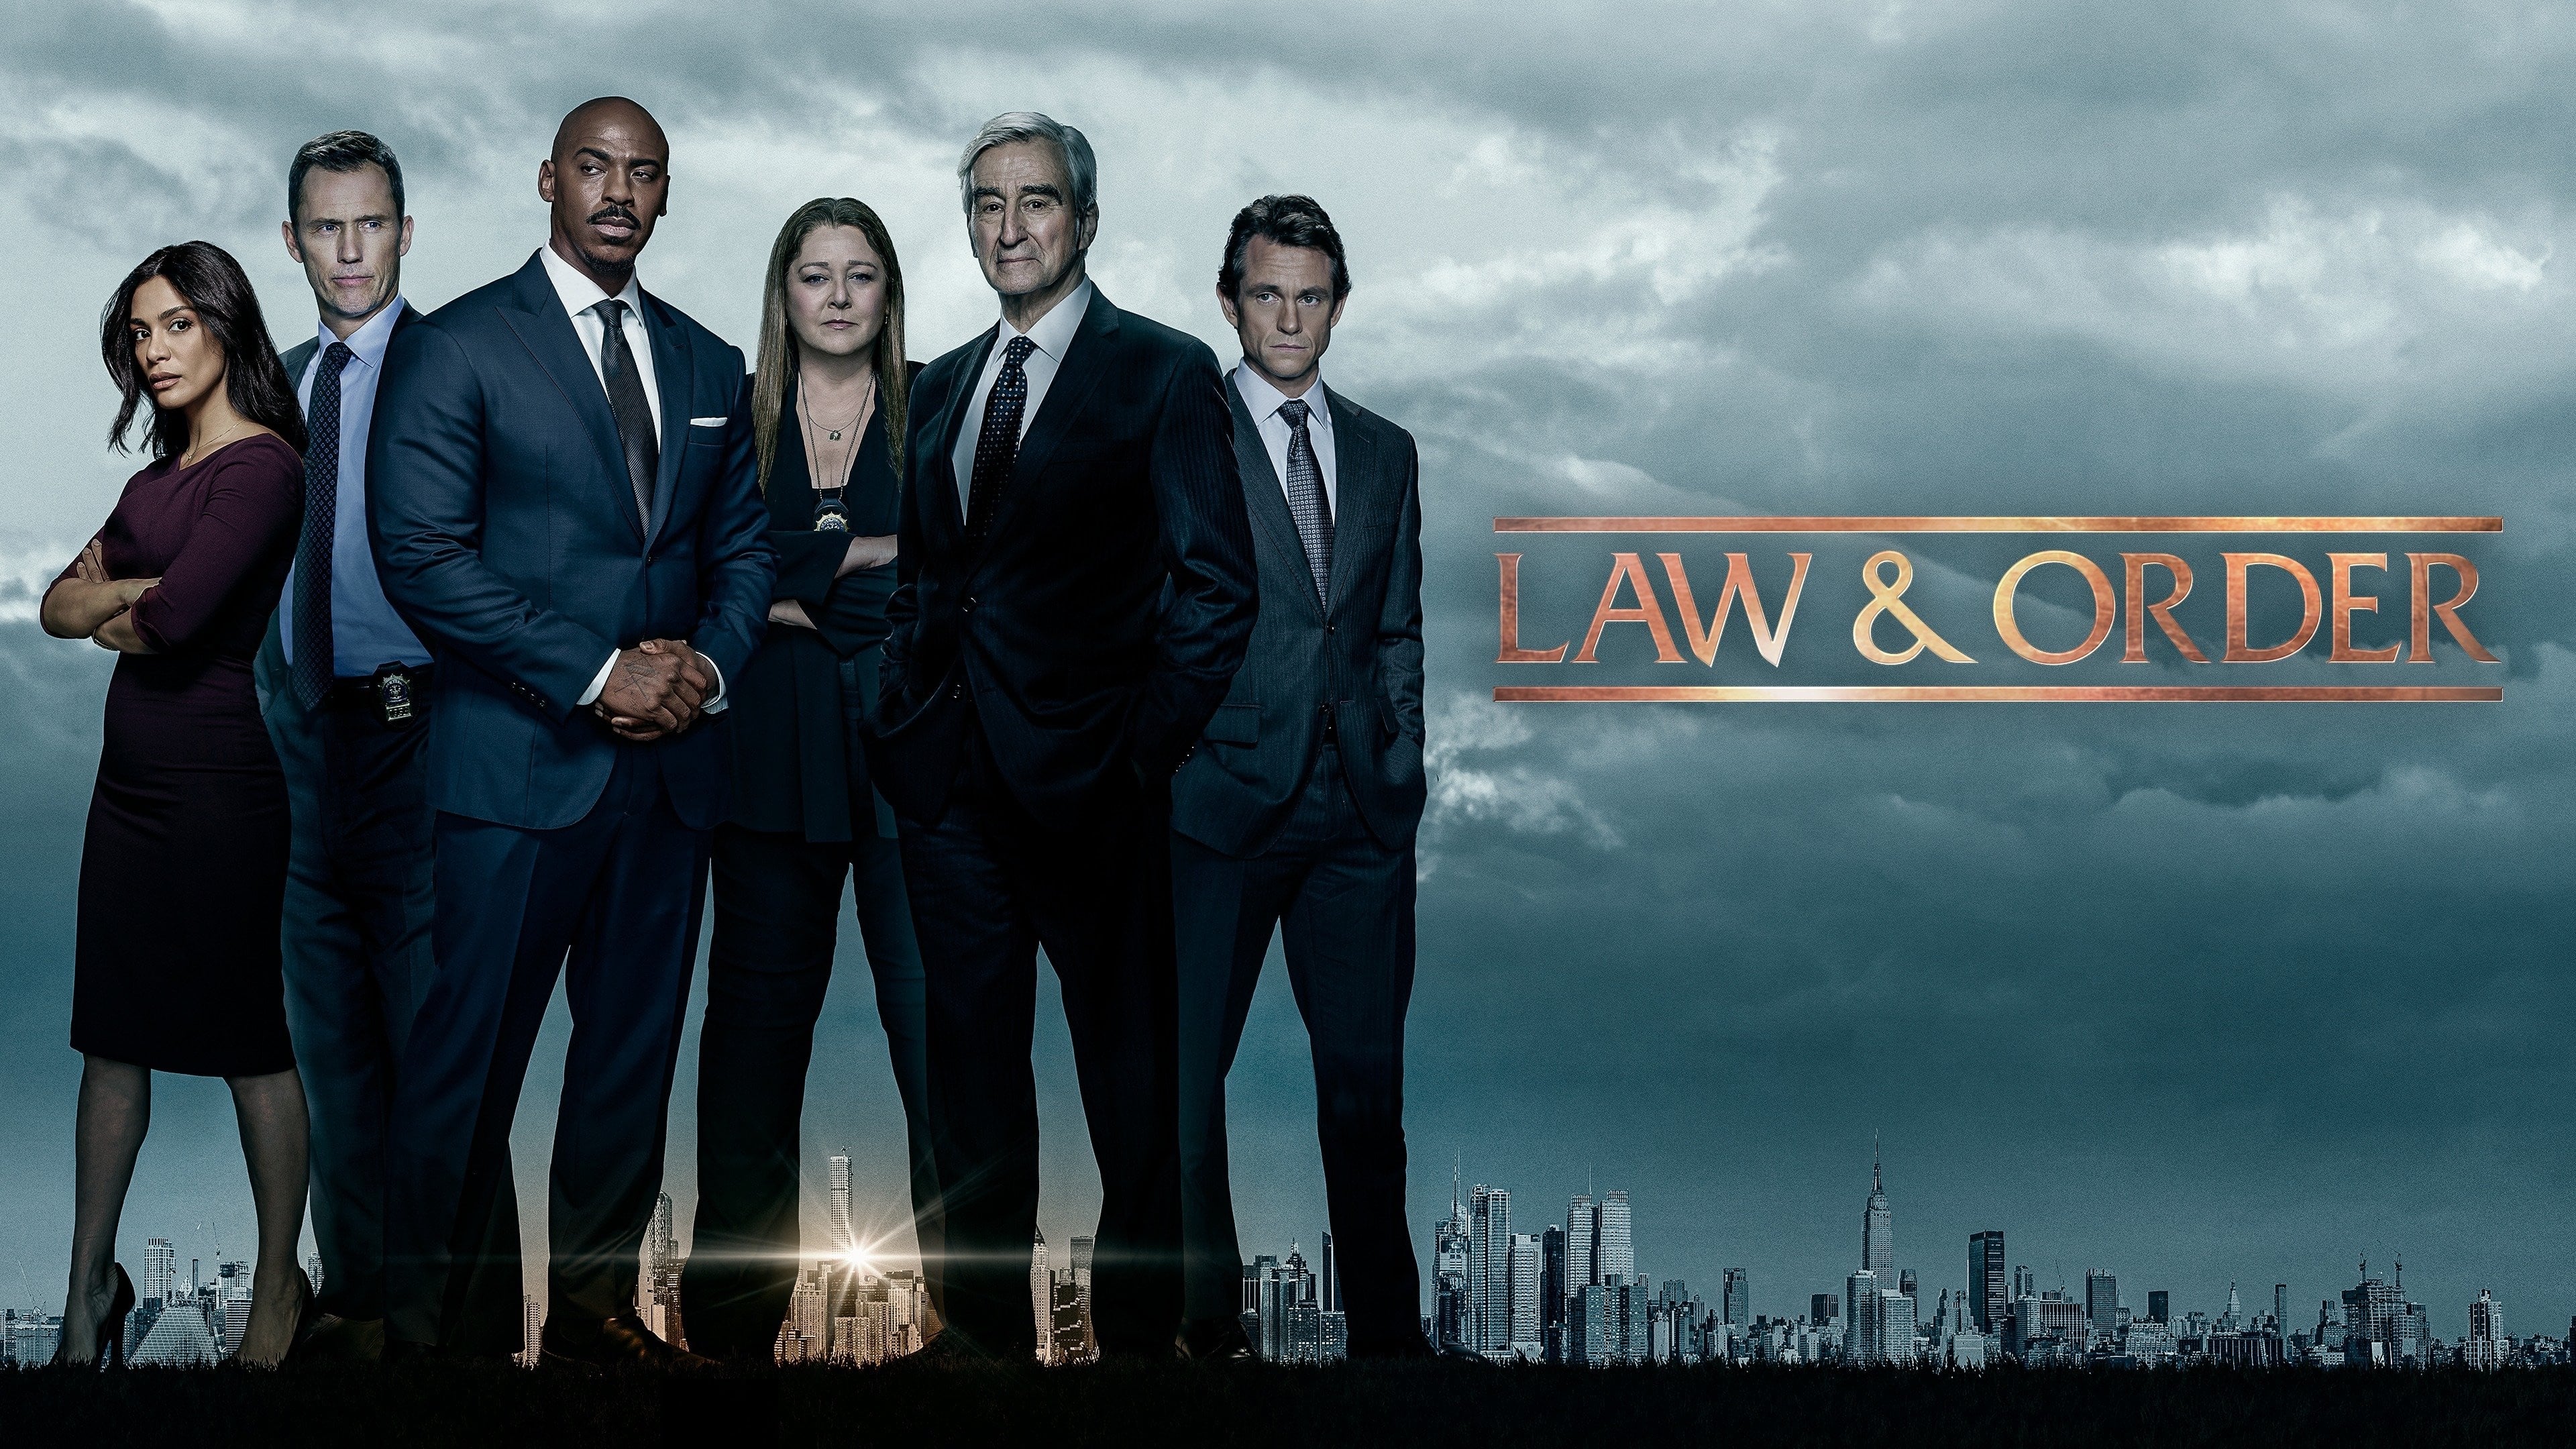 Law & Order - Season 23 Episode 5